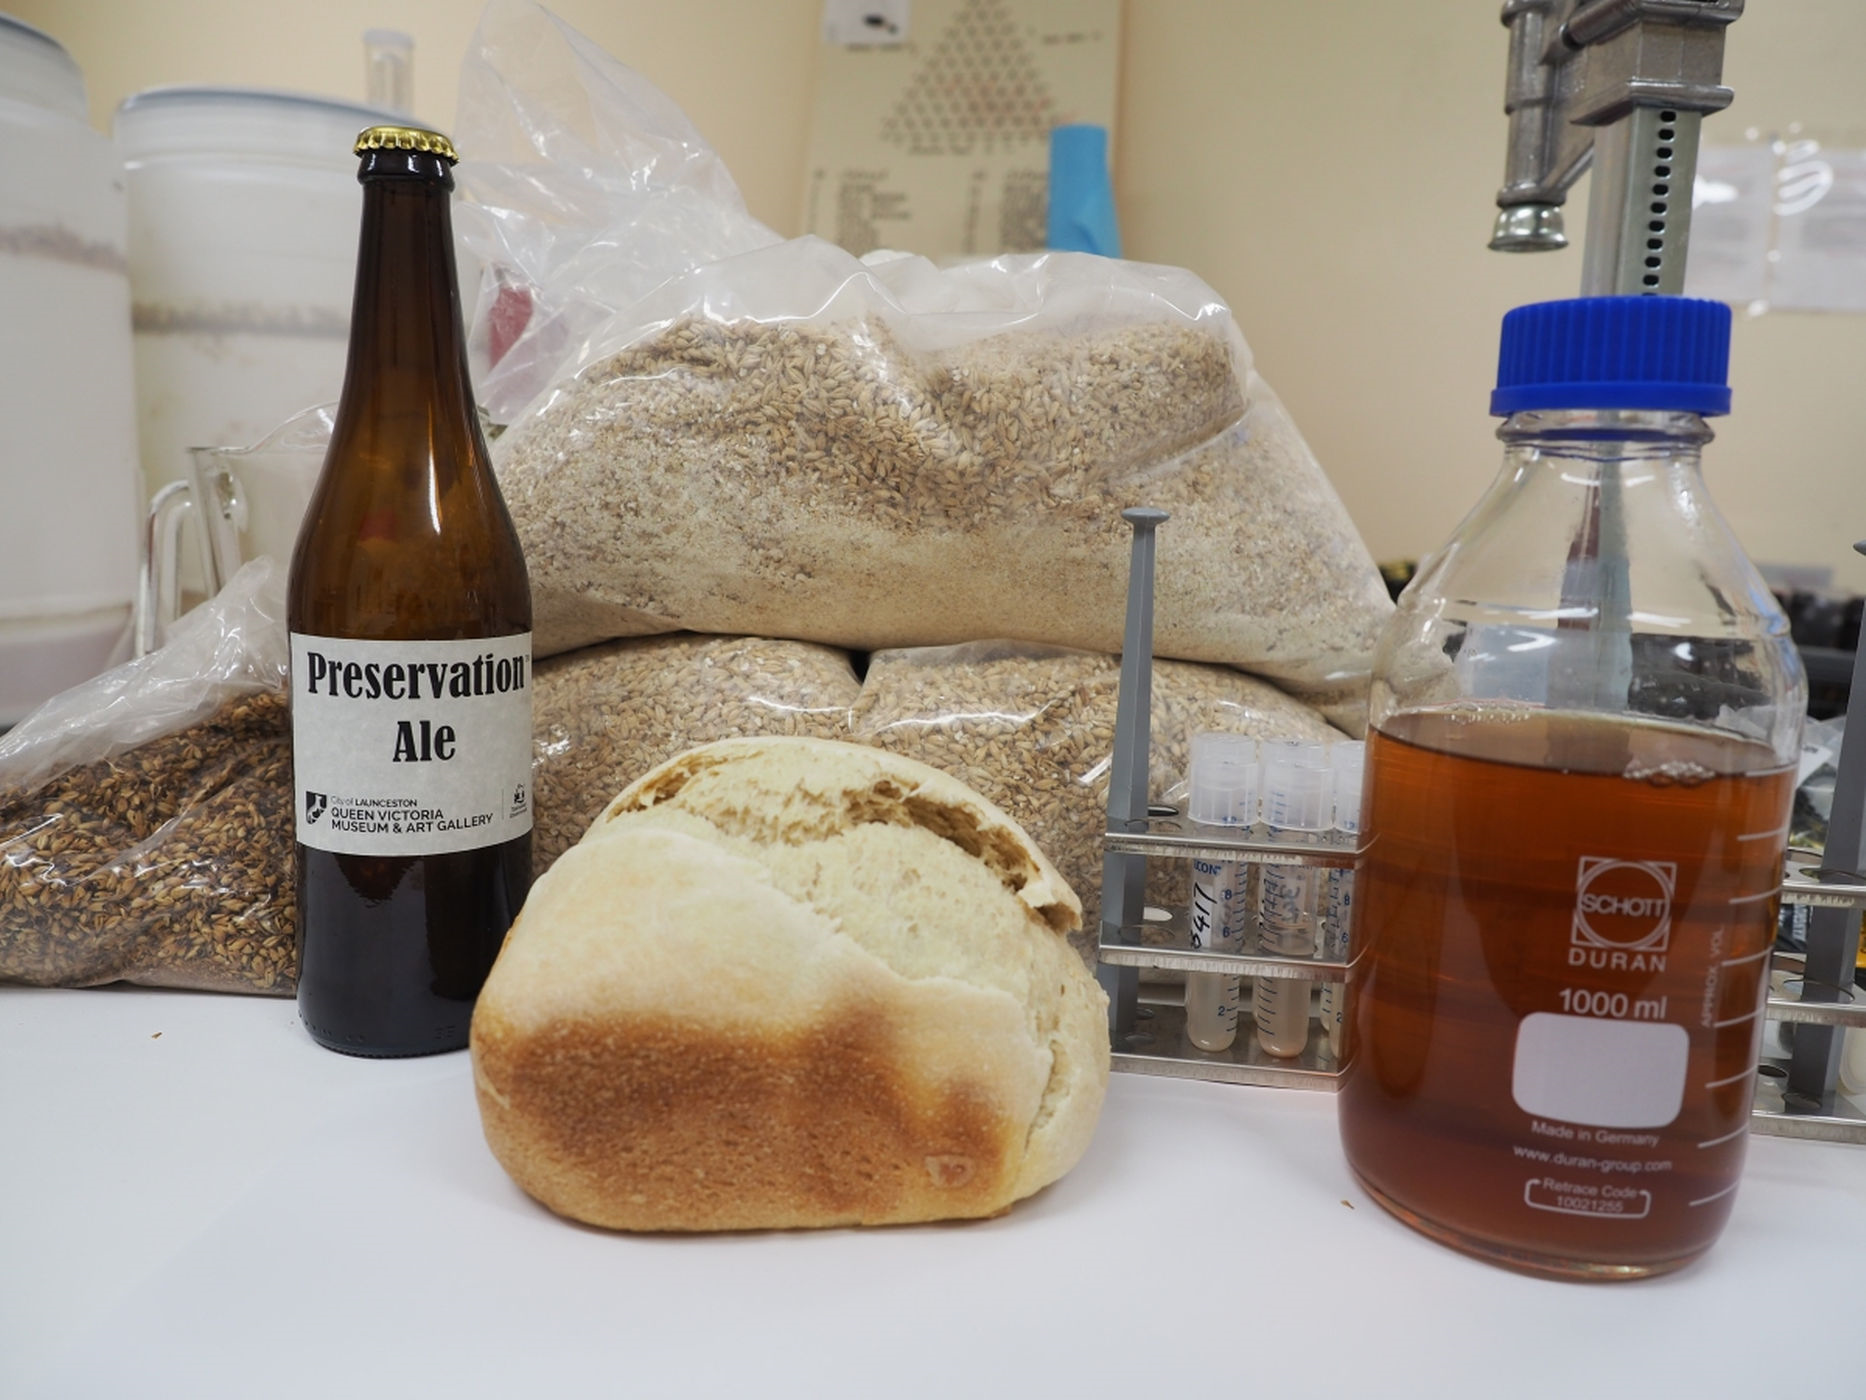 Oldest beer Preservation Ale yeast to bake bread